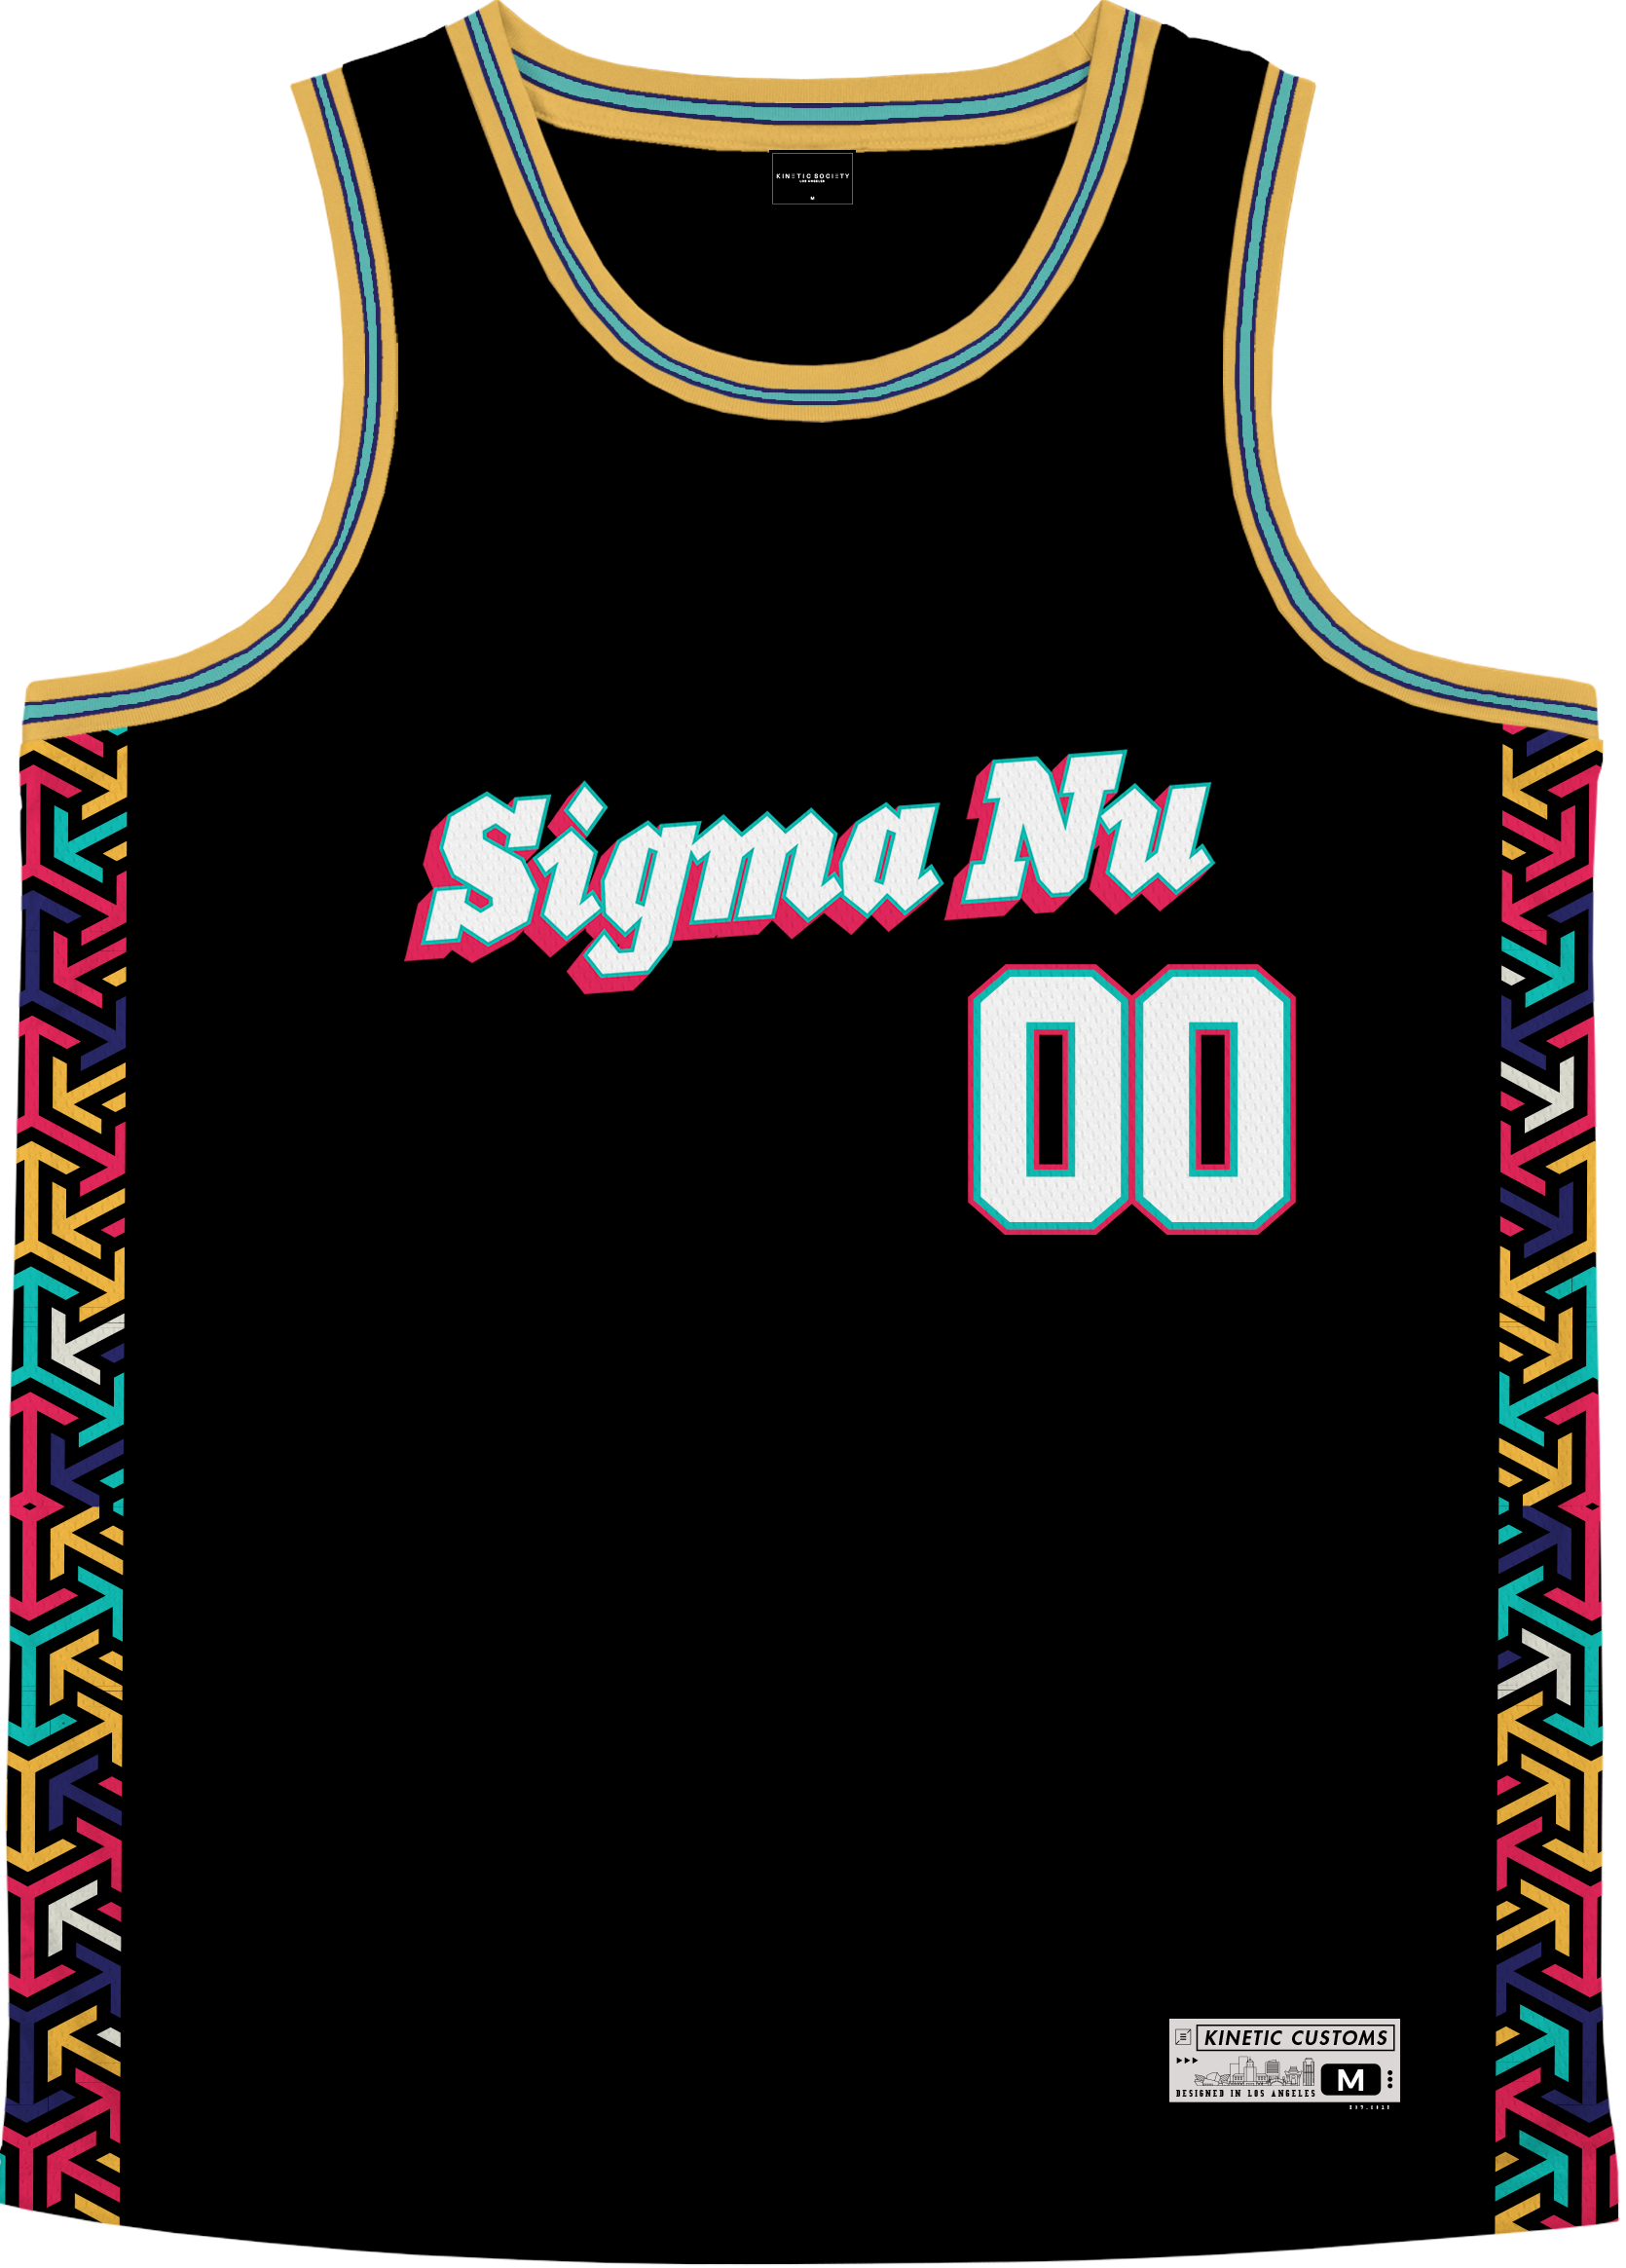 SIGMA NU - Cubic Arrows Basketball Jersey